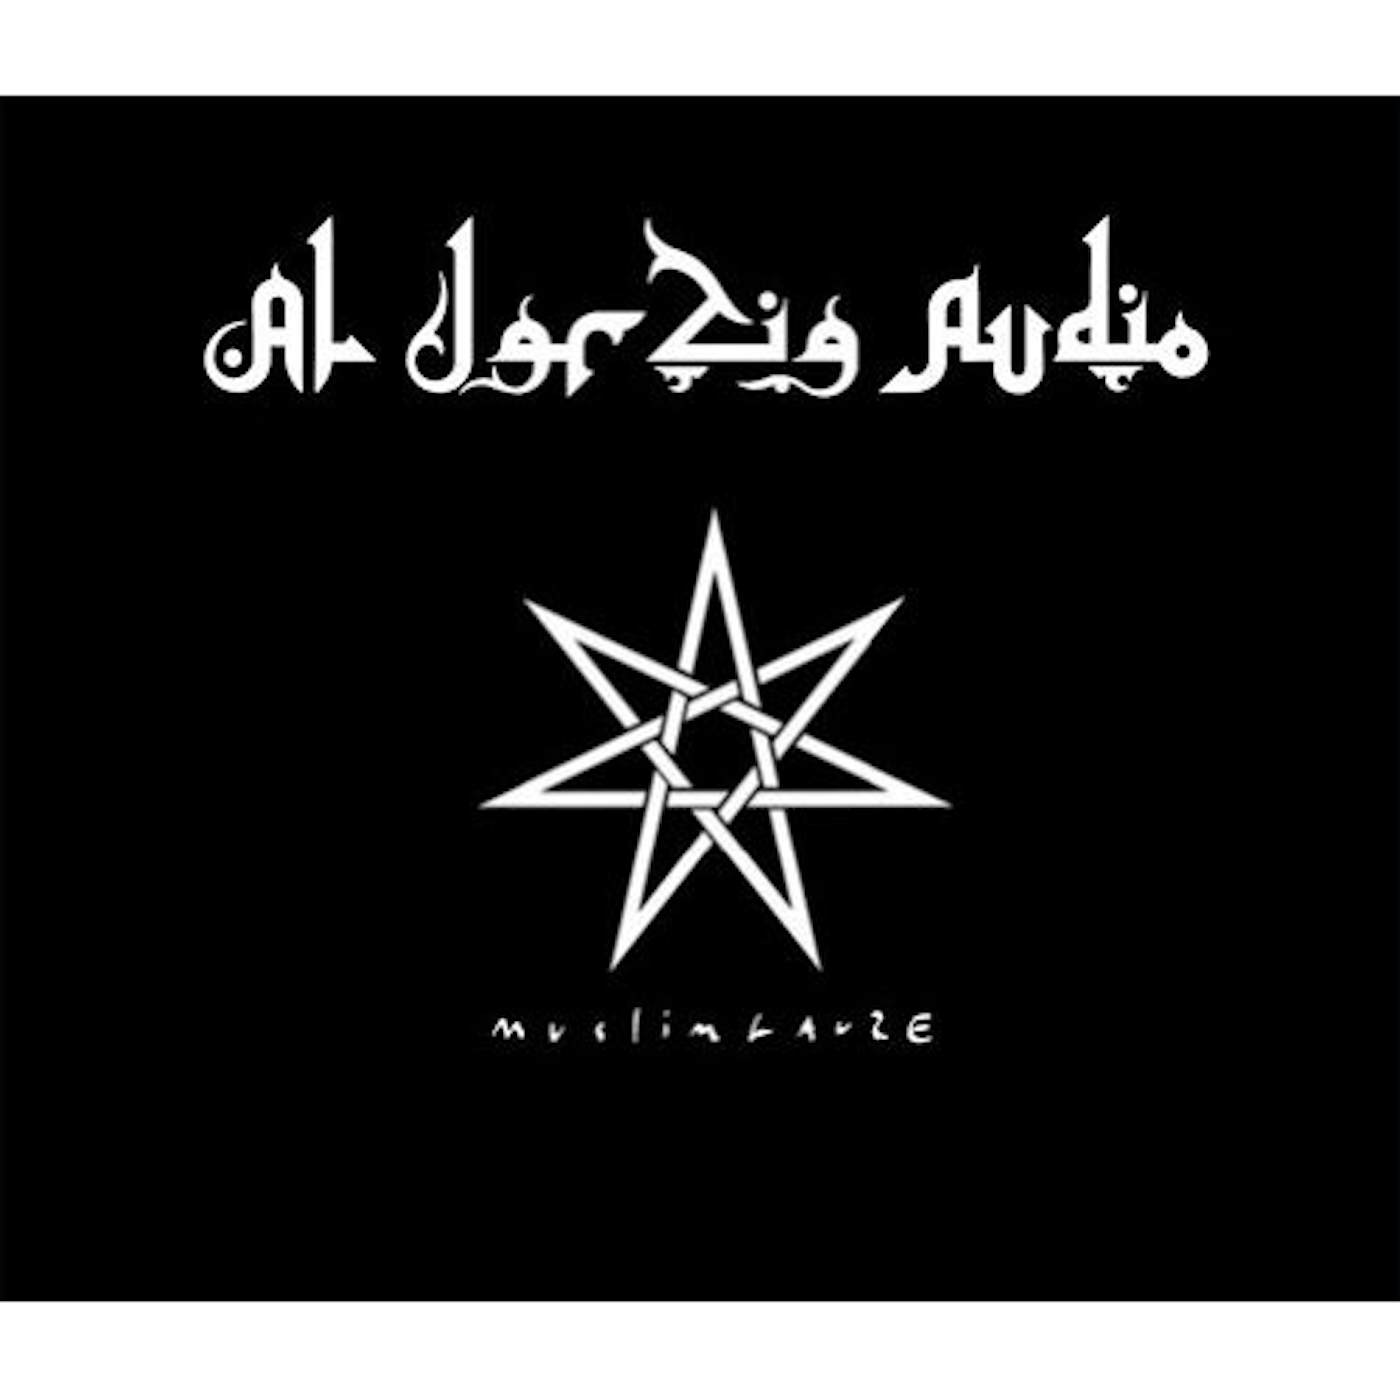 Muslimgauze AL JAR ZIA AUDIO CD